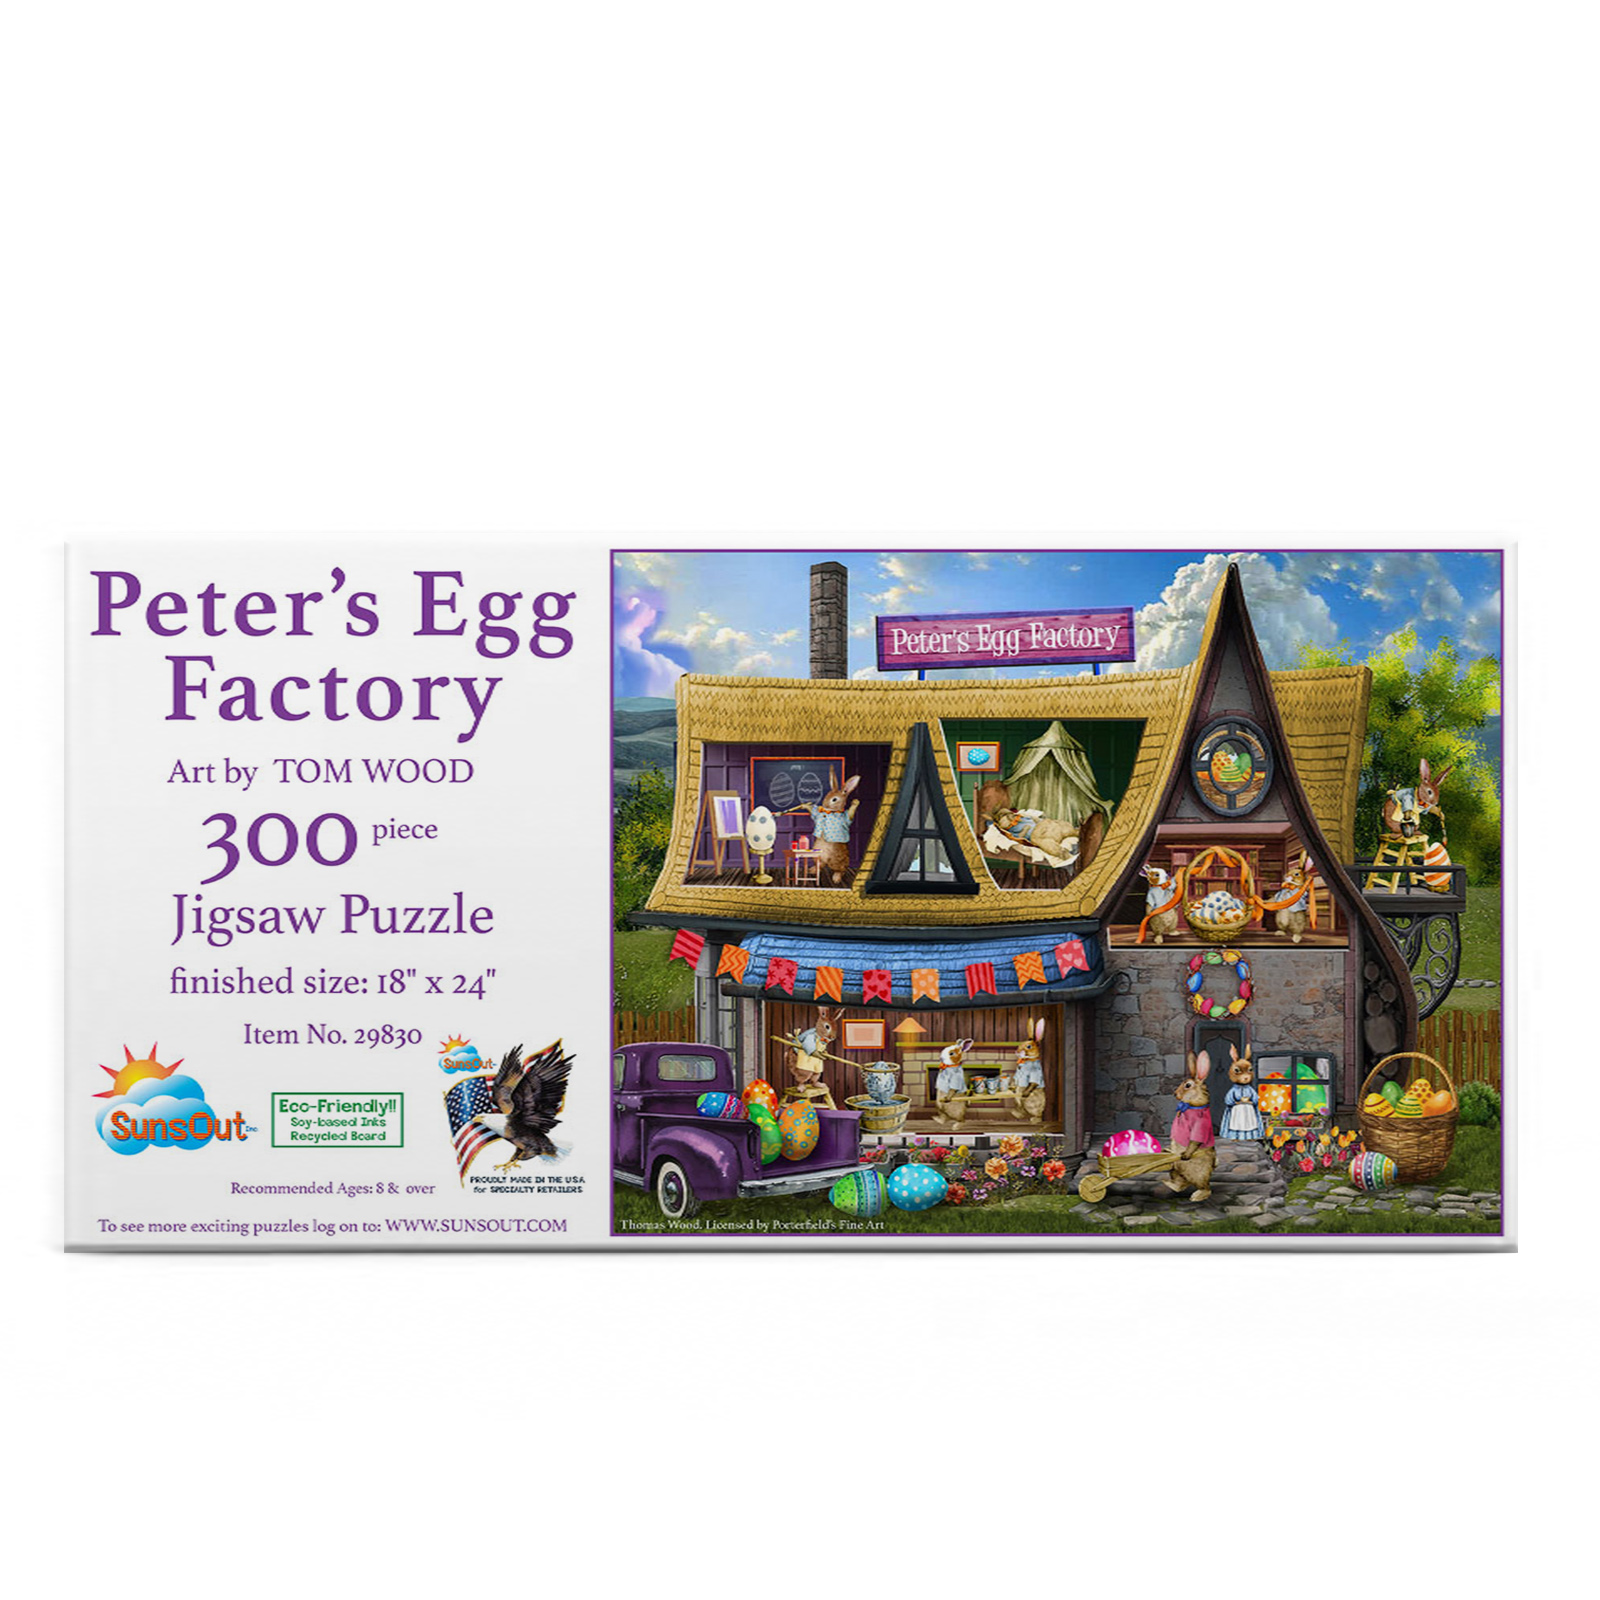 Peter's Egg Factory